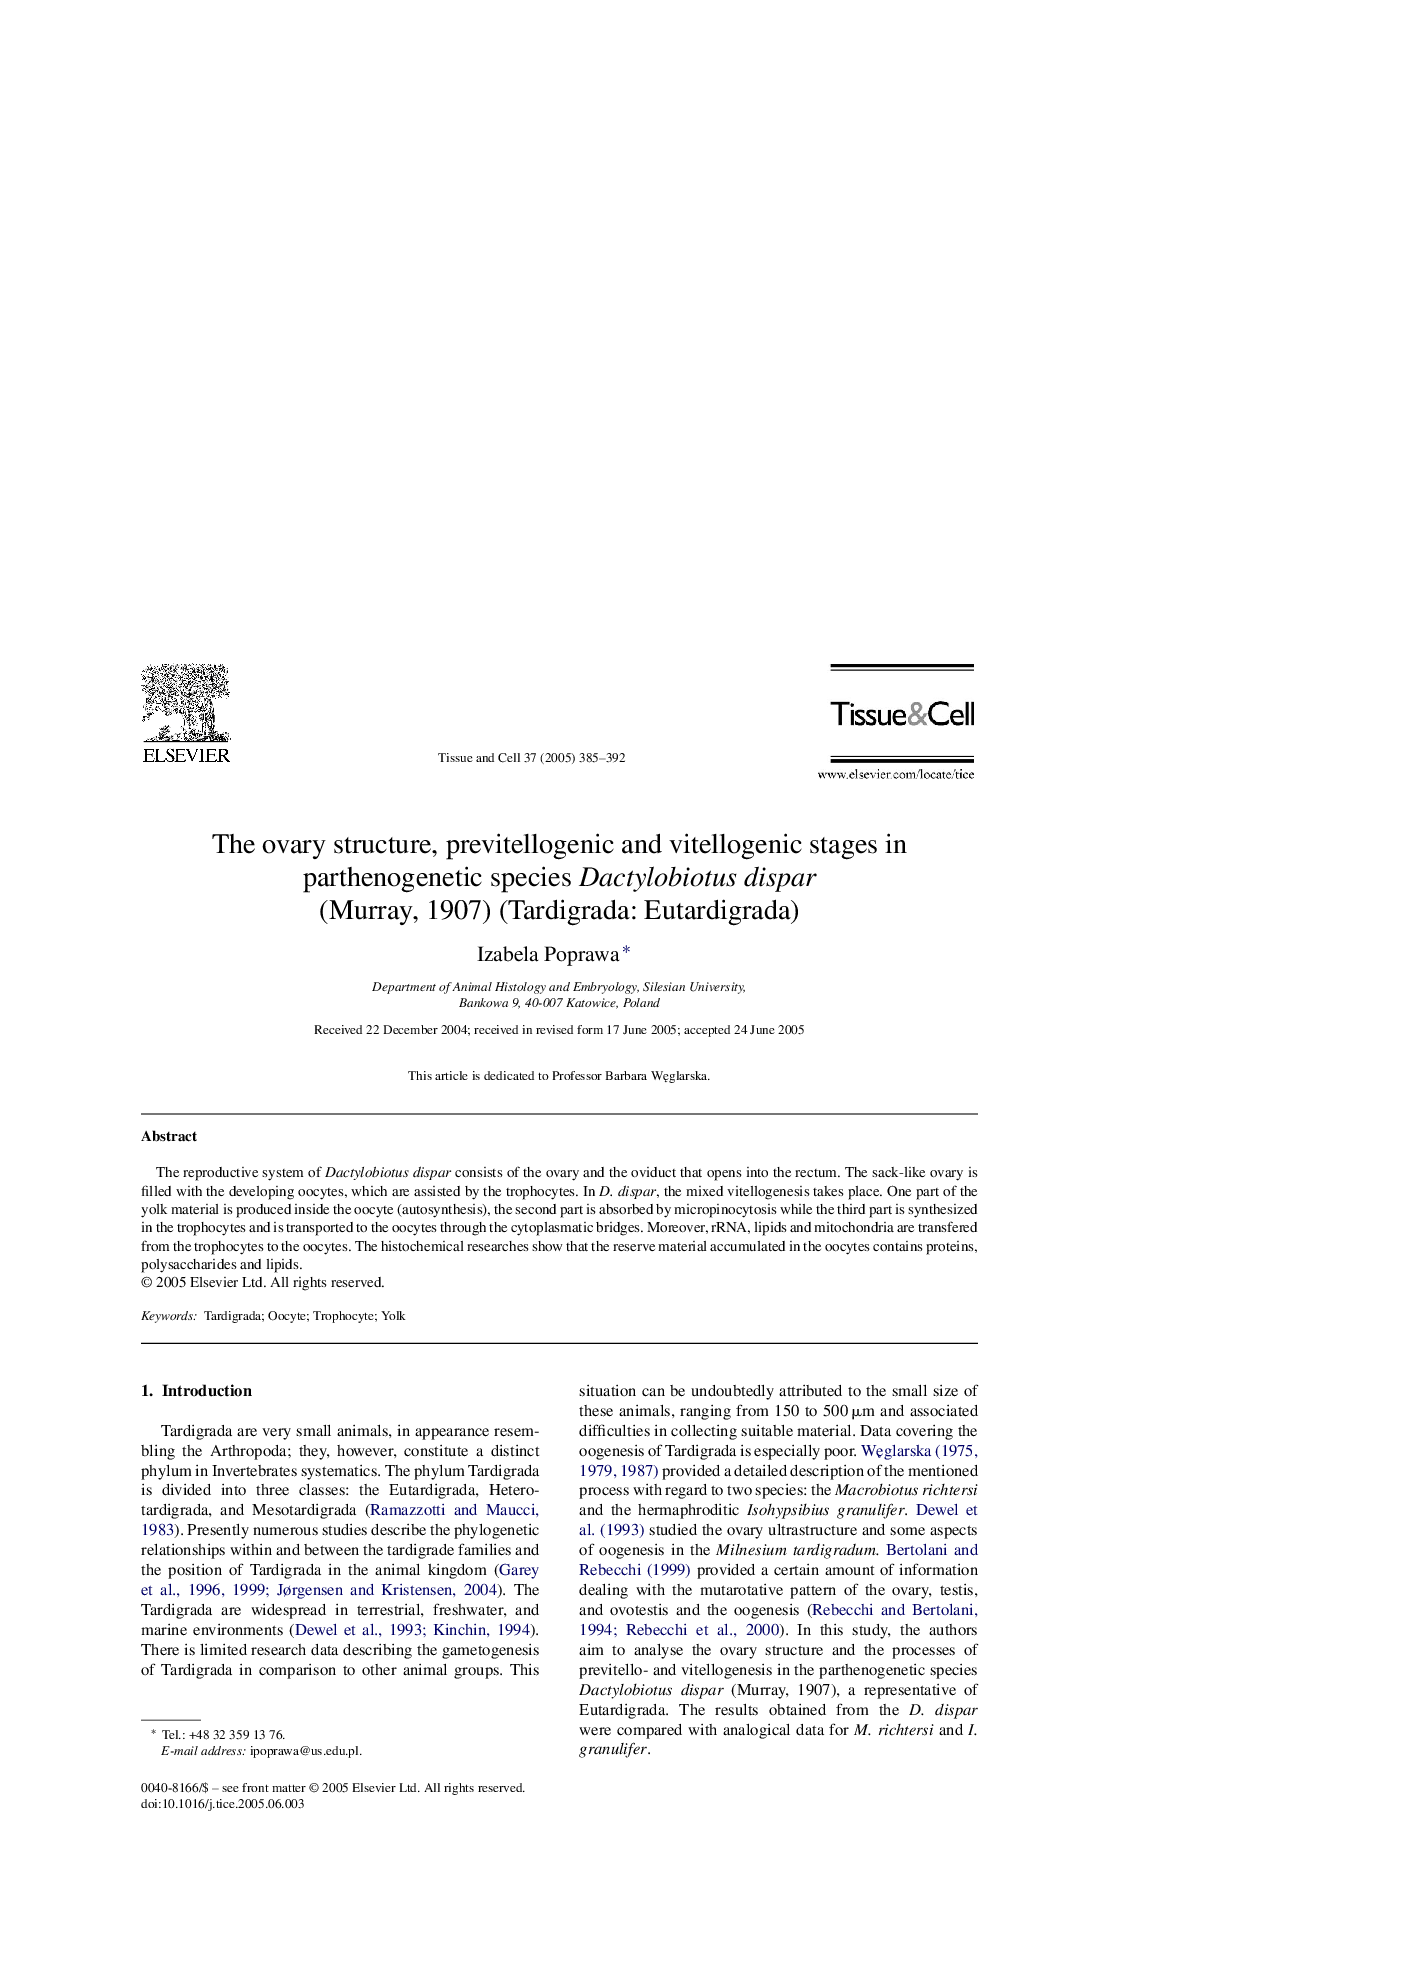 The ovary structure, previtellogenic and vitellogenic stages in parthenogenetic species Dactylobiotus dispar (Murray, 1907) (Tardigrada: Eutardigrada)